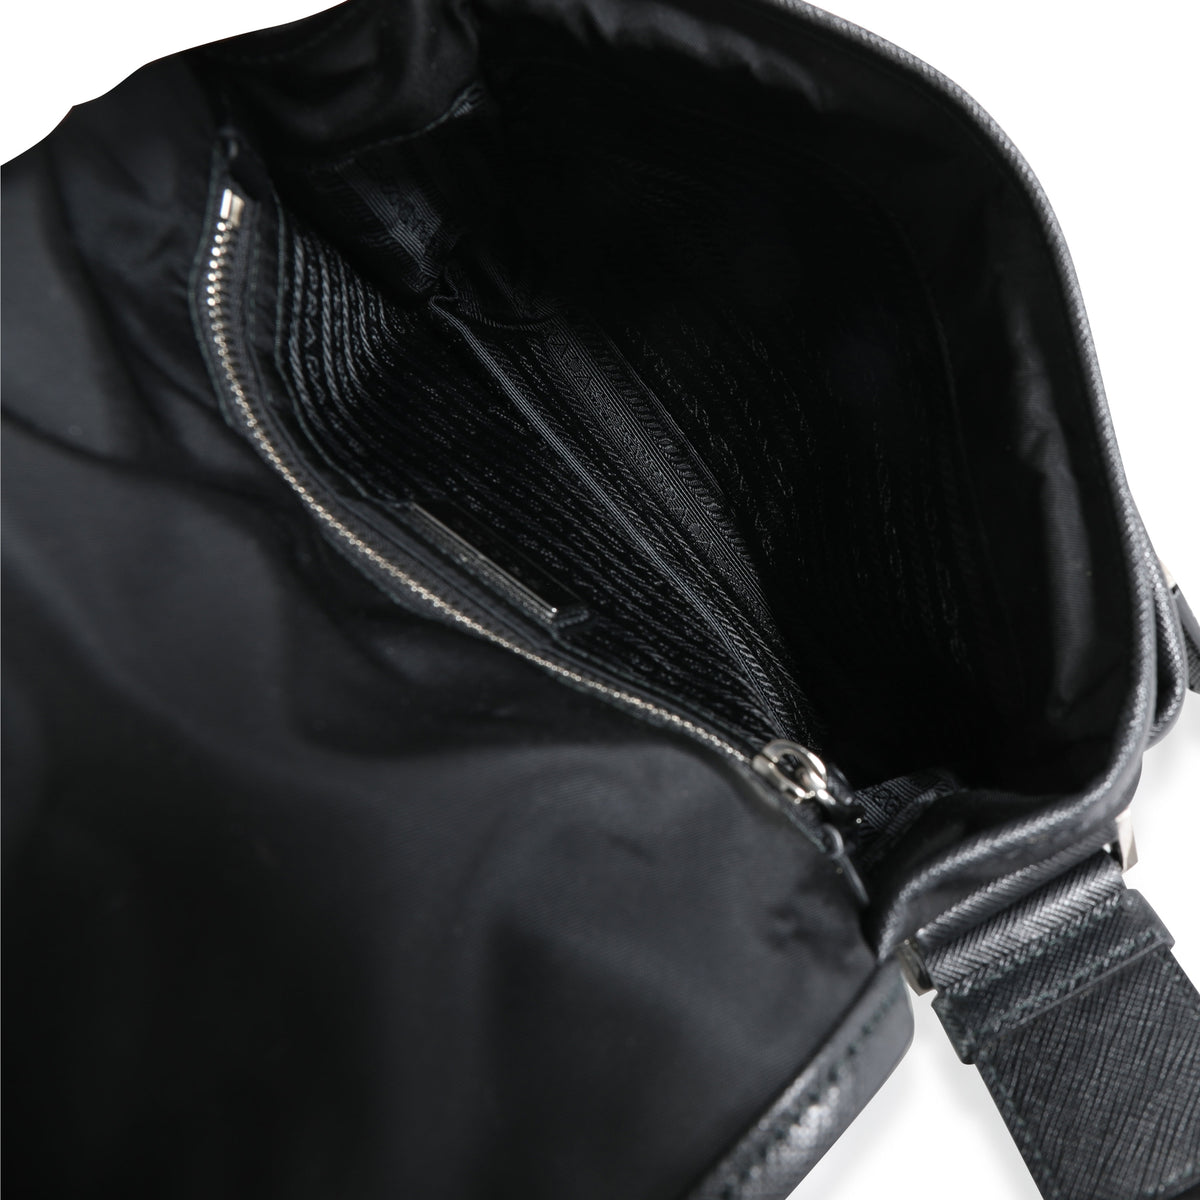 Prada, Bags, Preowned Prada Saffiano Leather Monochrome Bag Powder Pink  Matching Wallet